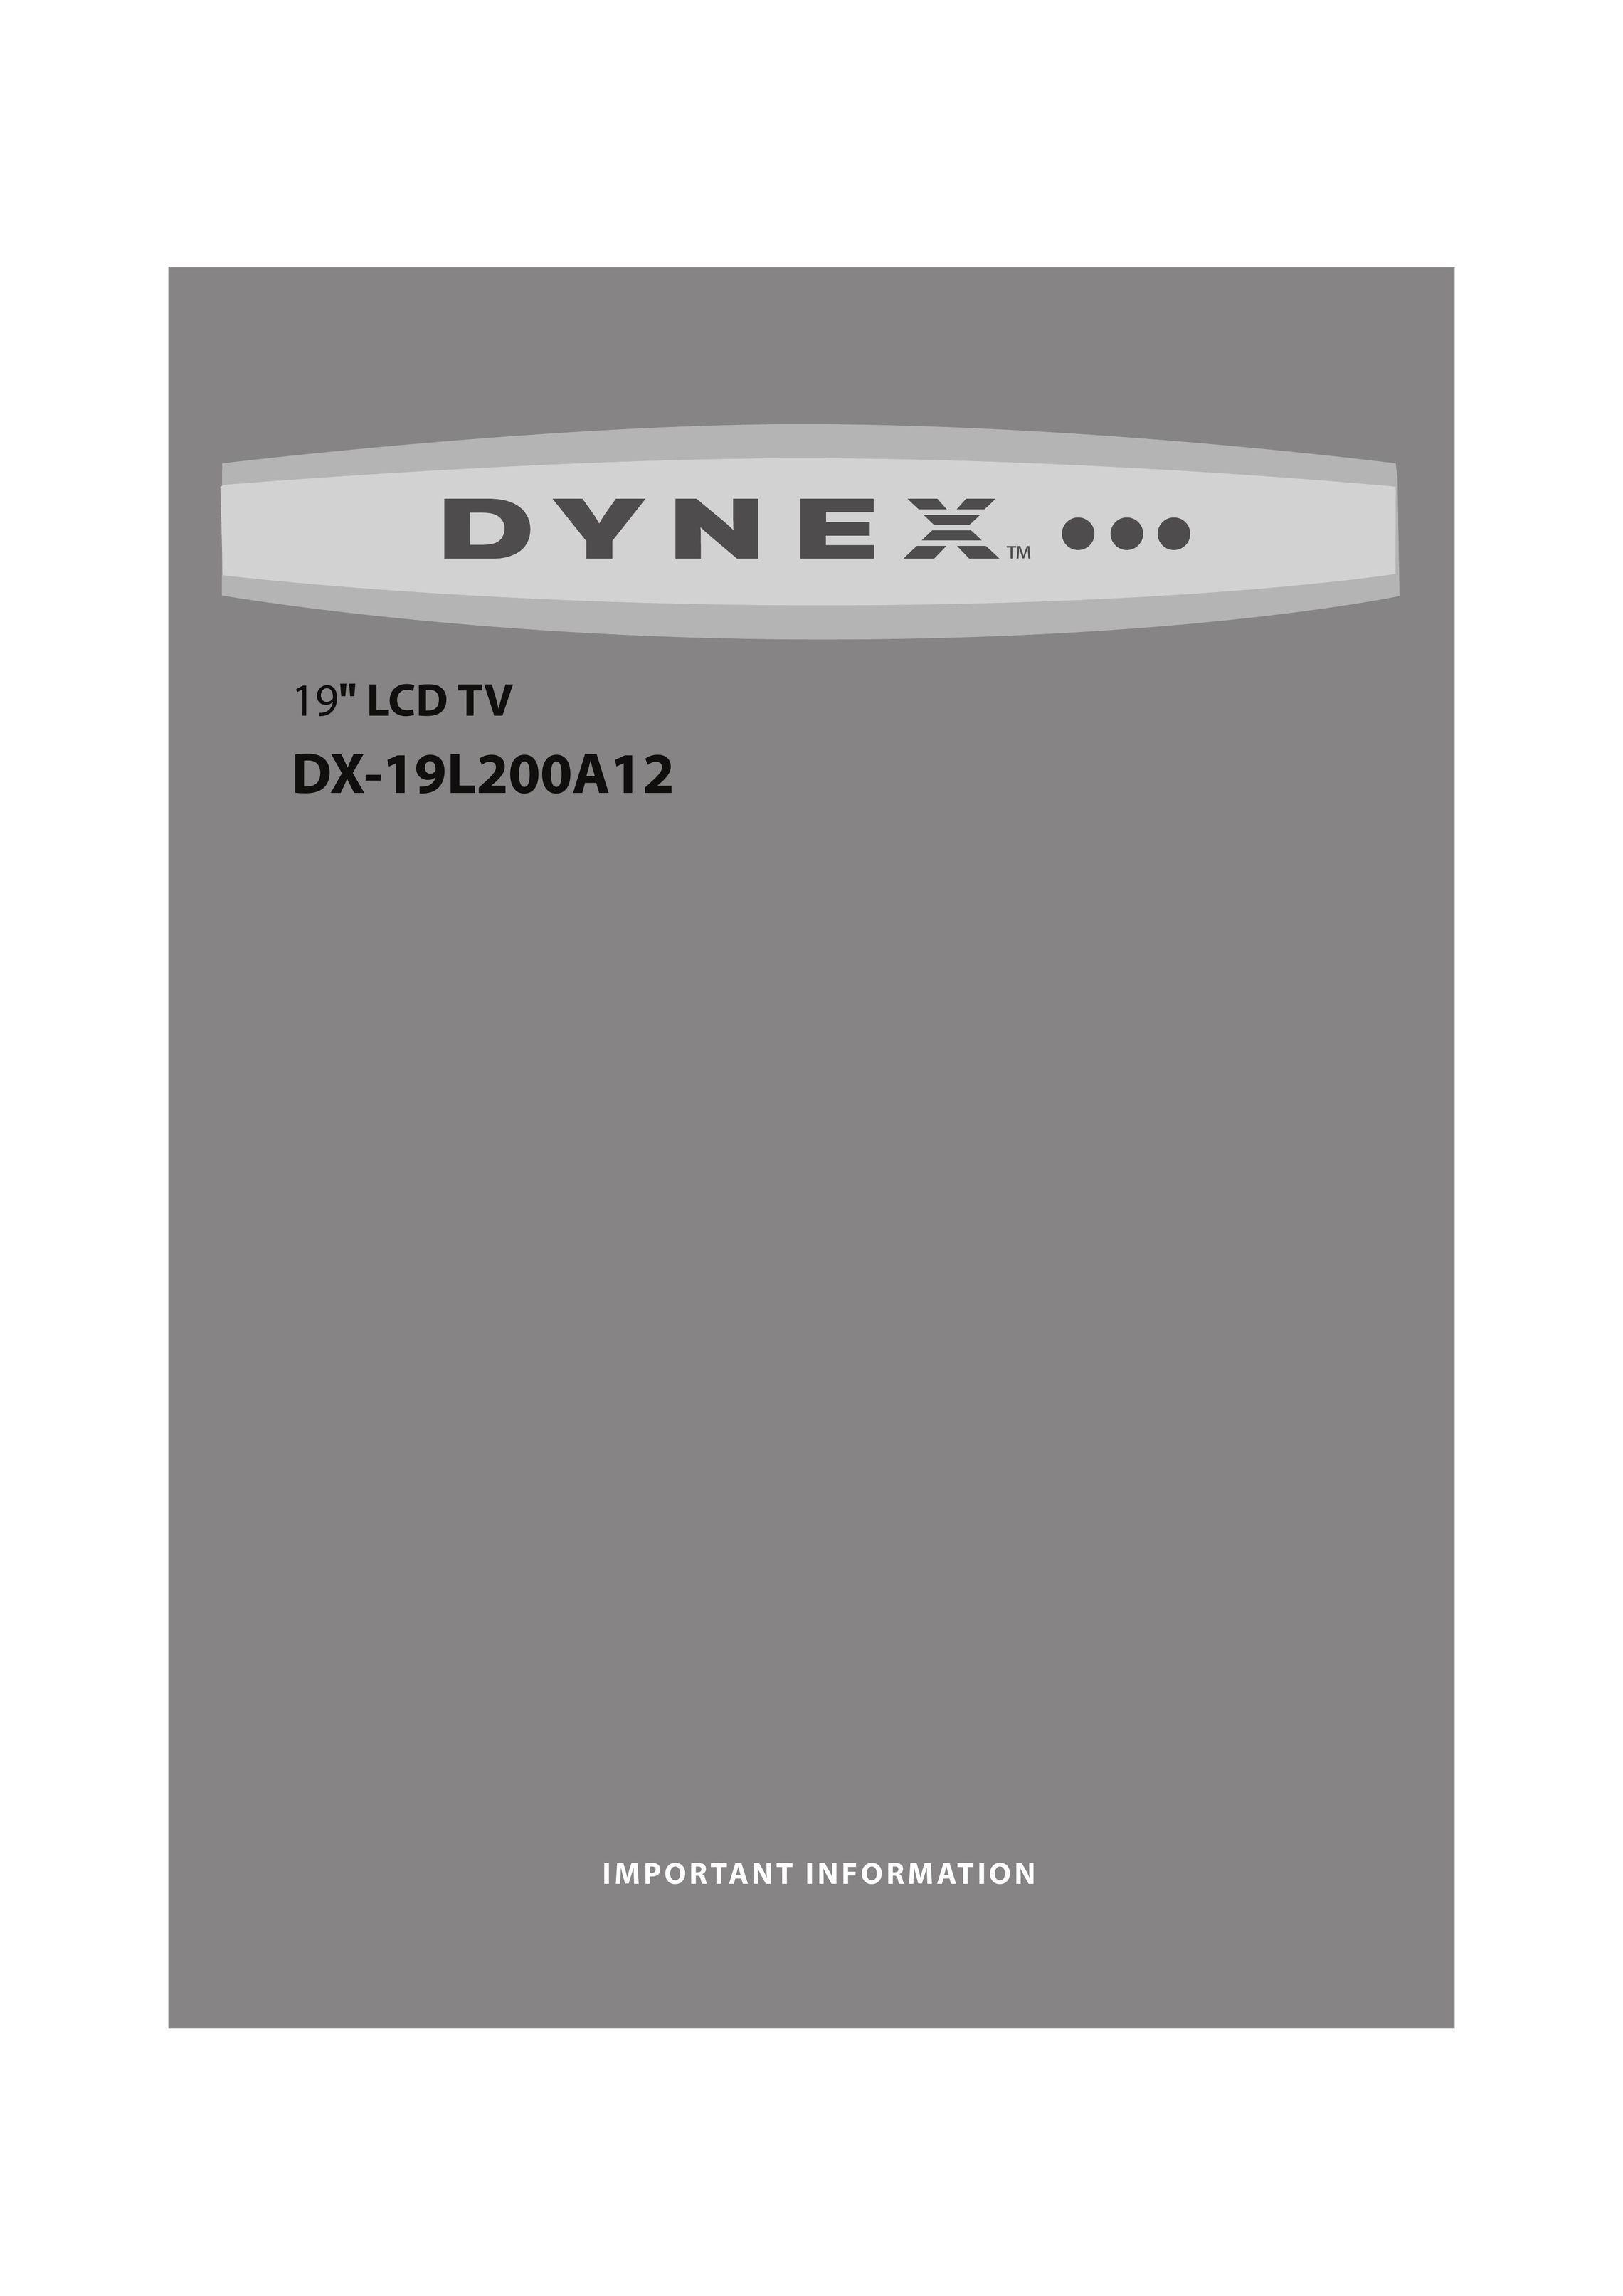 Dynex DX-19L200A12 Flat Panel Television User Manual